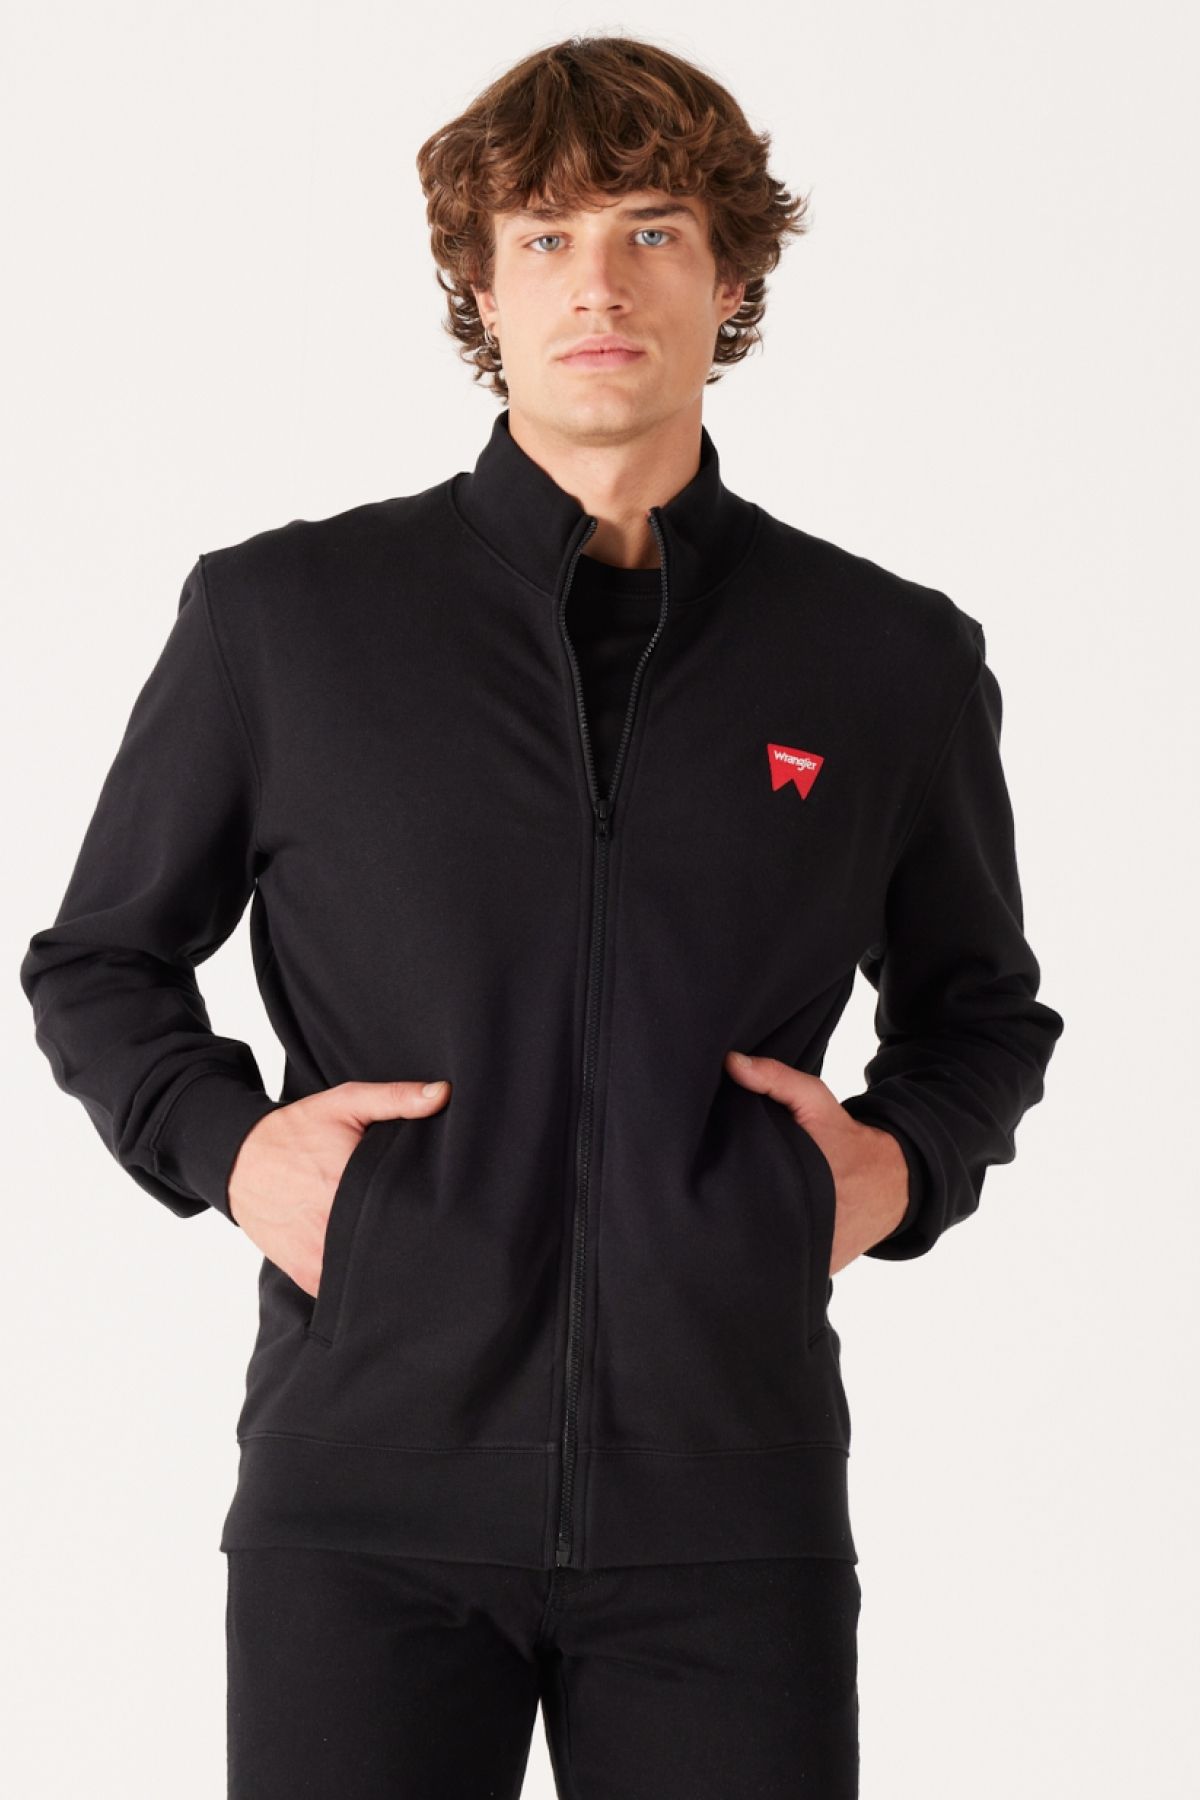 Wrangler به طور منظم مناسب برش طبیعی 100 ٪ ژاکت پیراهن سیاه و سفید